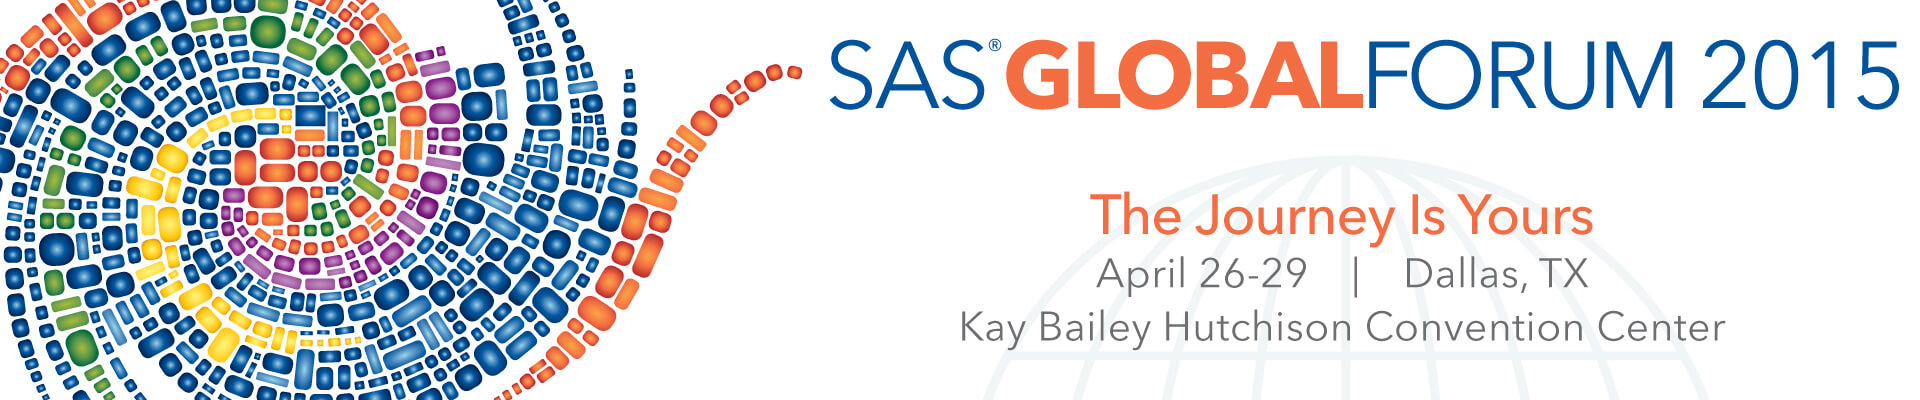 SAS Global Forum 2015 and Cyberanalytics